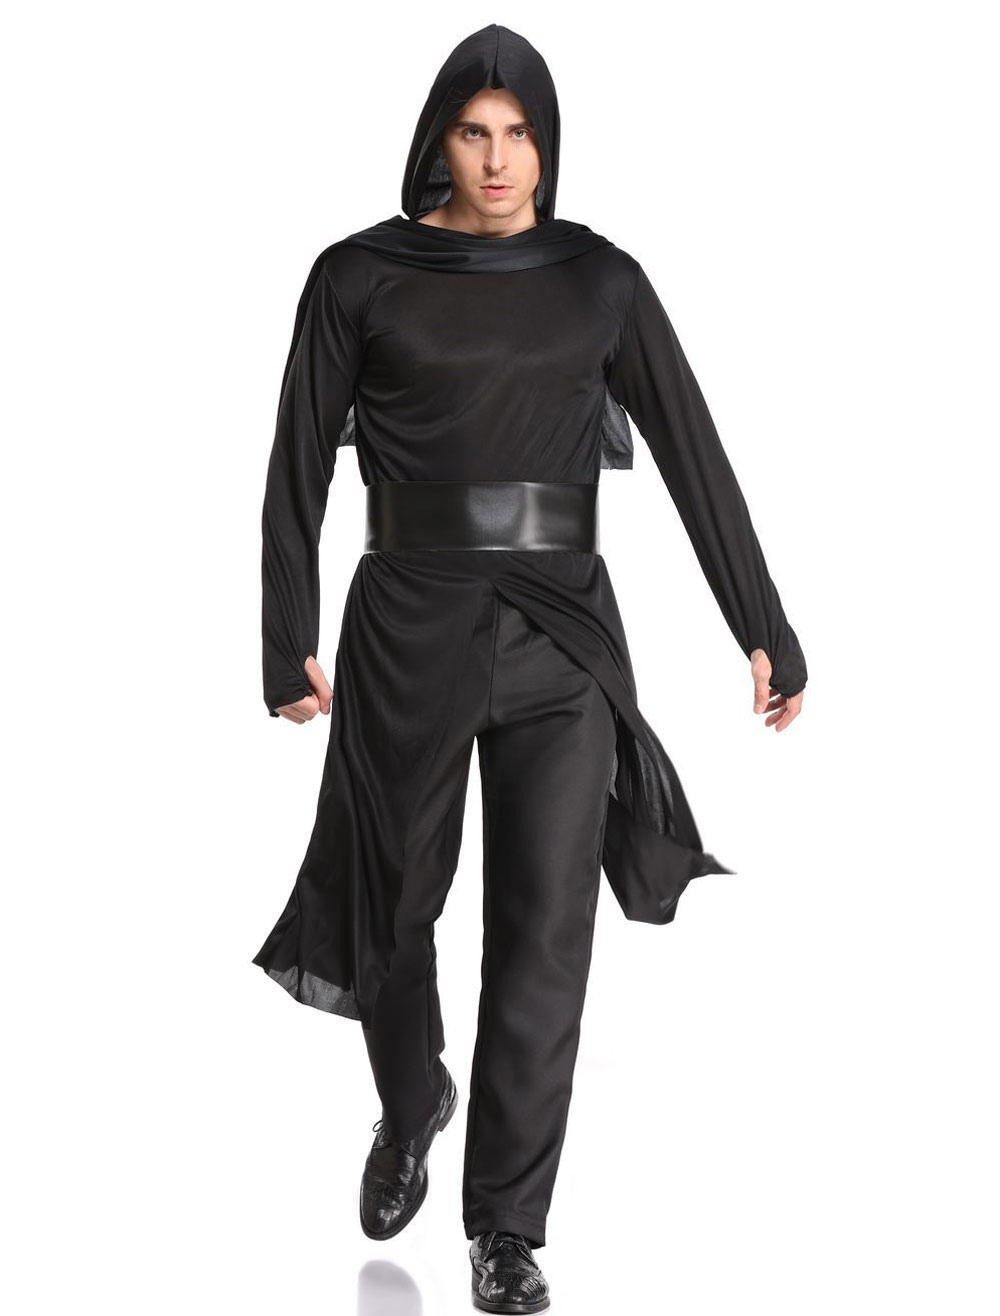 Men Ninja Warrior Master Costume Black Outfit Halloween